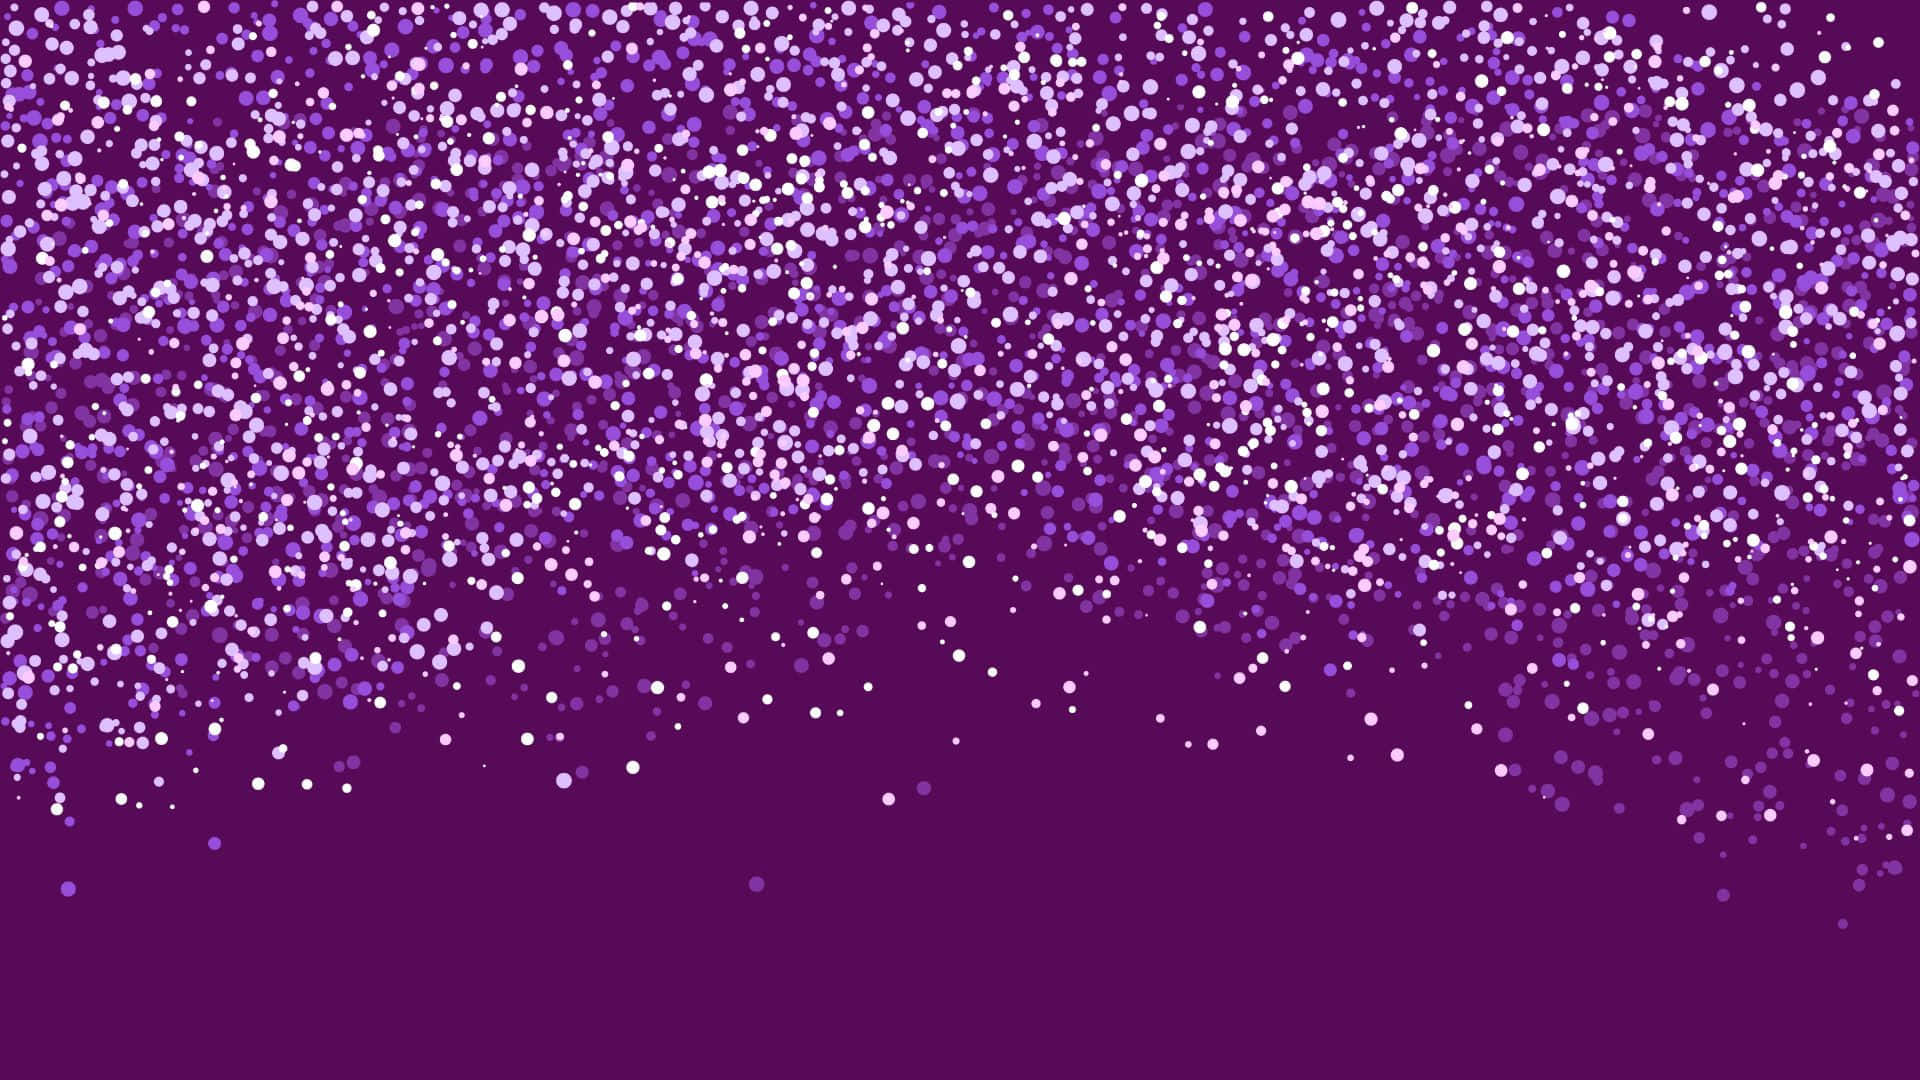 100+] Purple Sparkle Background s 